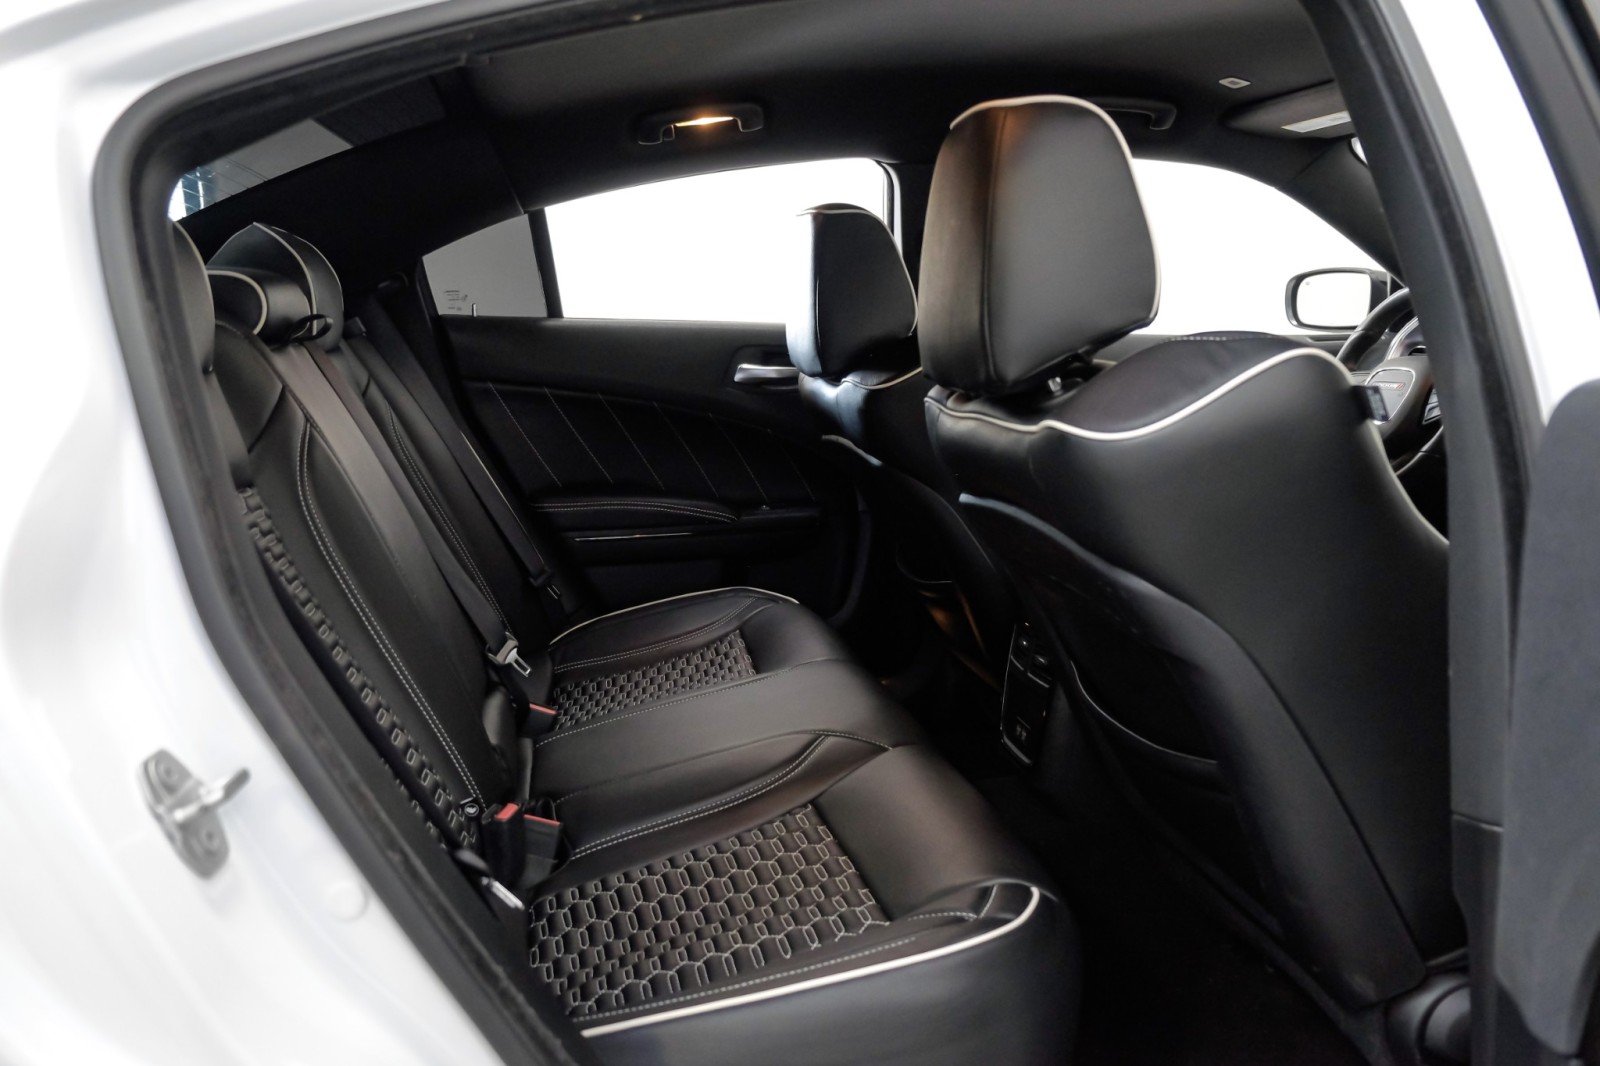 2020 Dodge Charger GT CustomLeather BlackTopPkg RESERVECUSTOM CstmSus 34